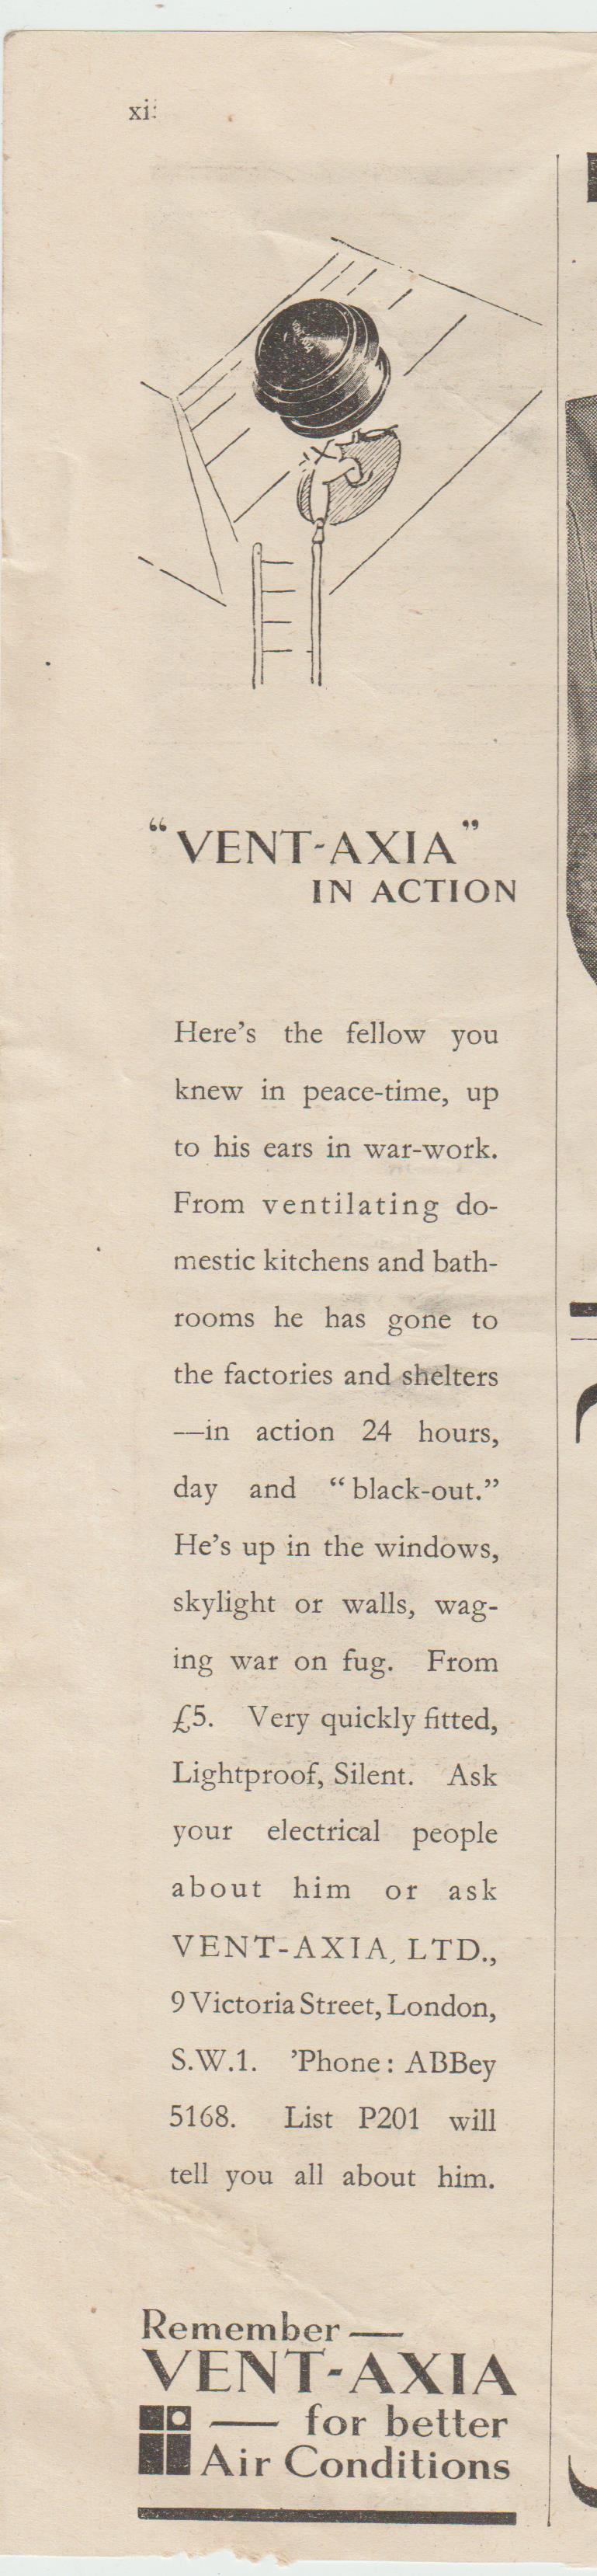 February 1941 Vent Axia advert